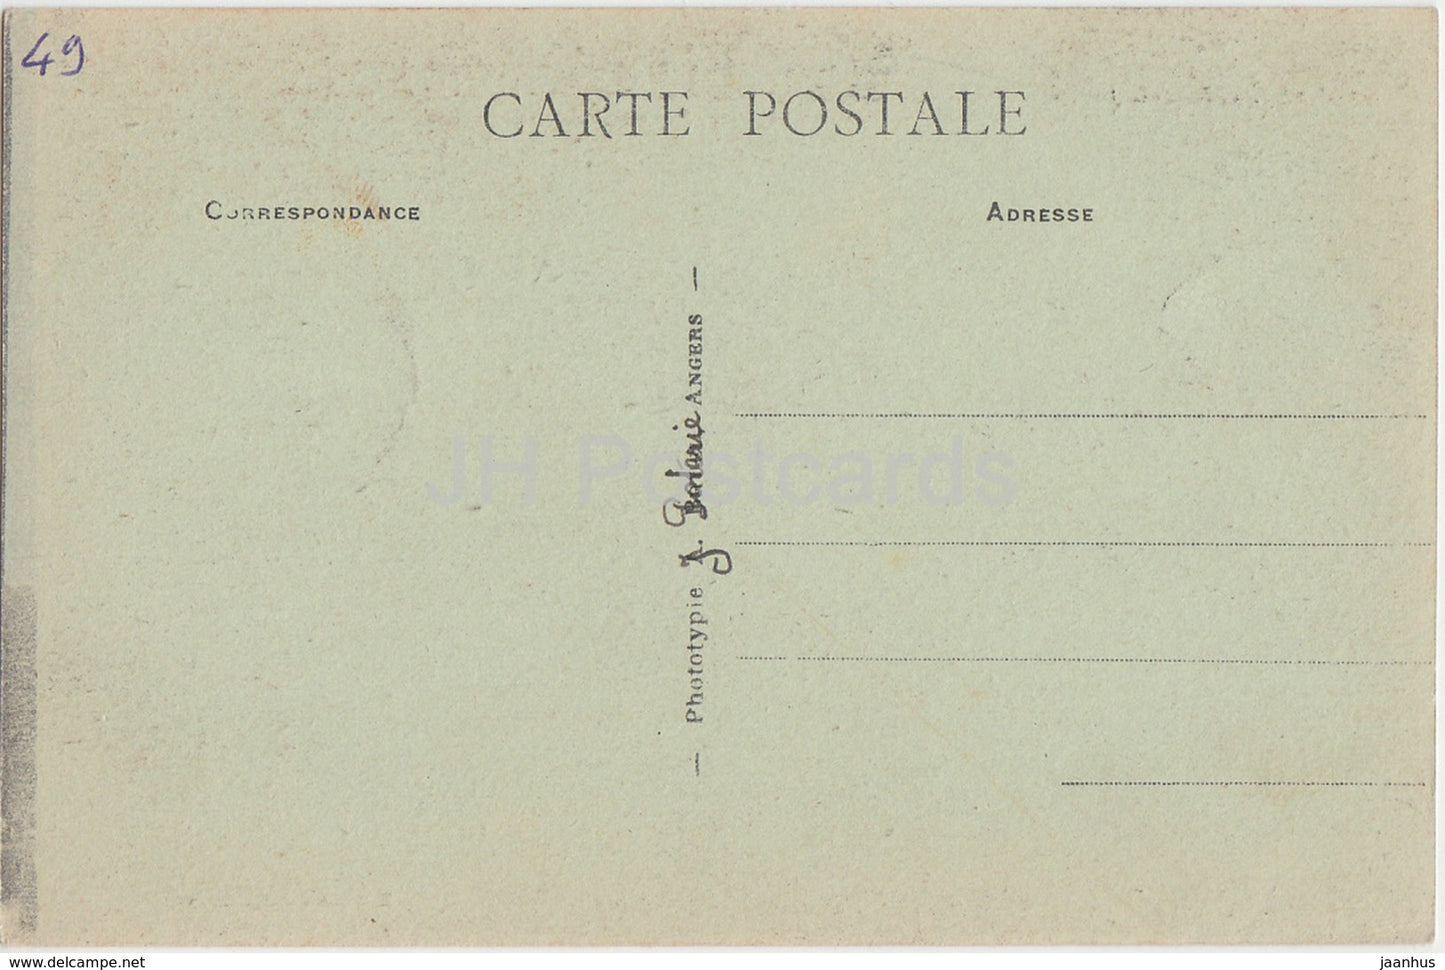 Maze - Montgeoffroy - La Grille monumentale - castle - 5 - old postcard - France - unused